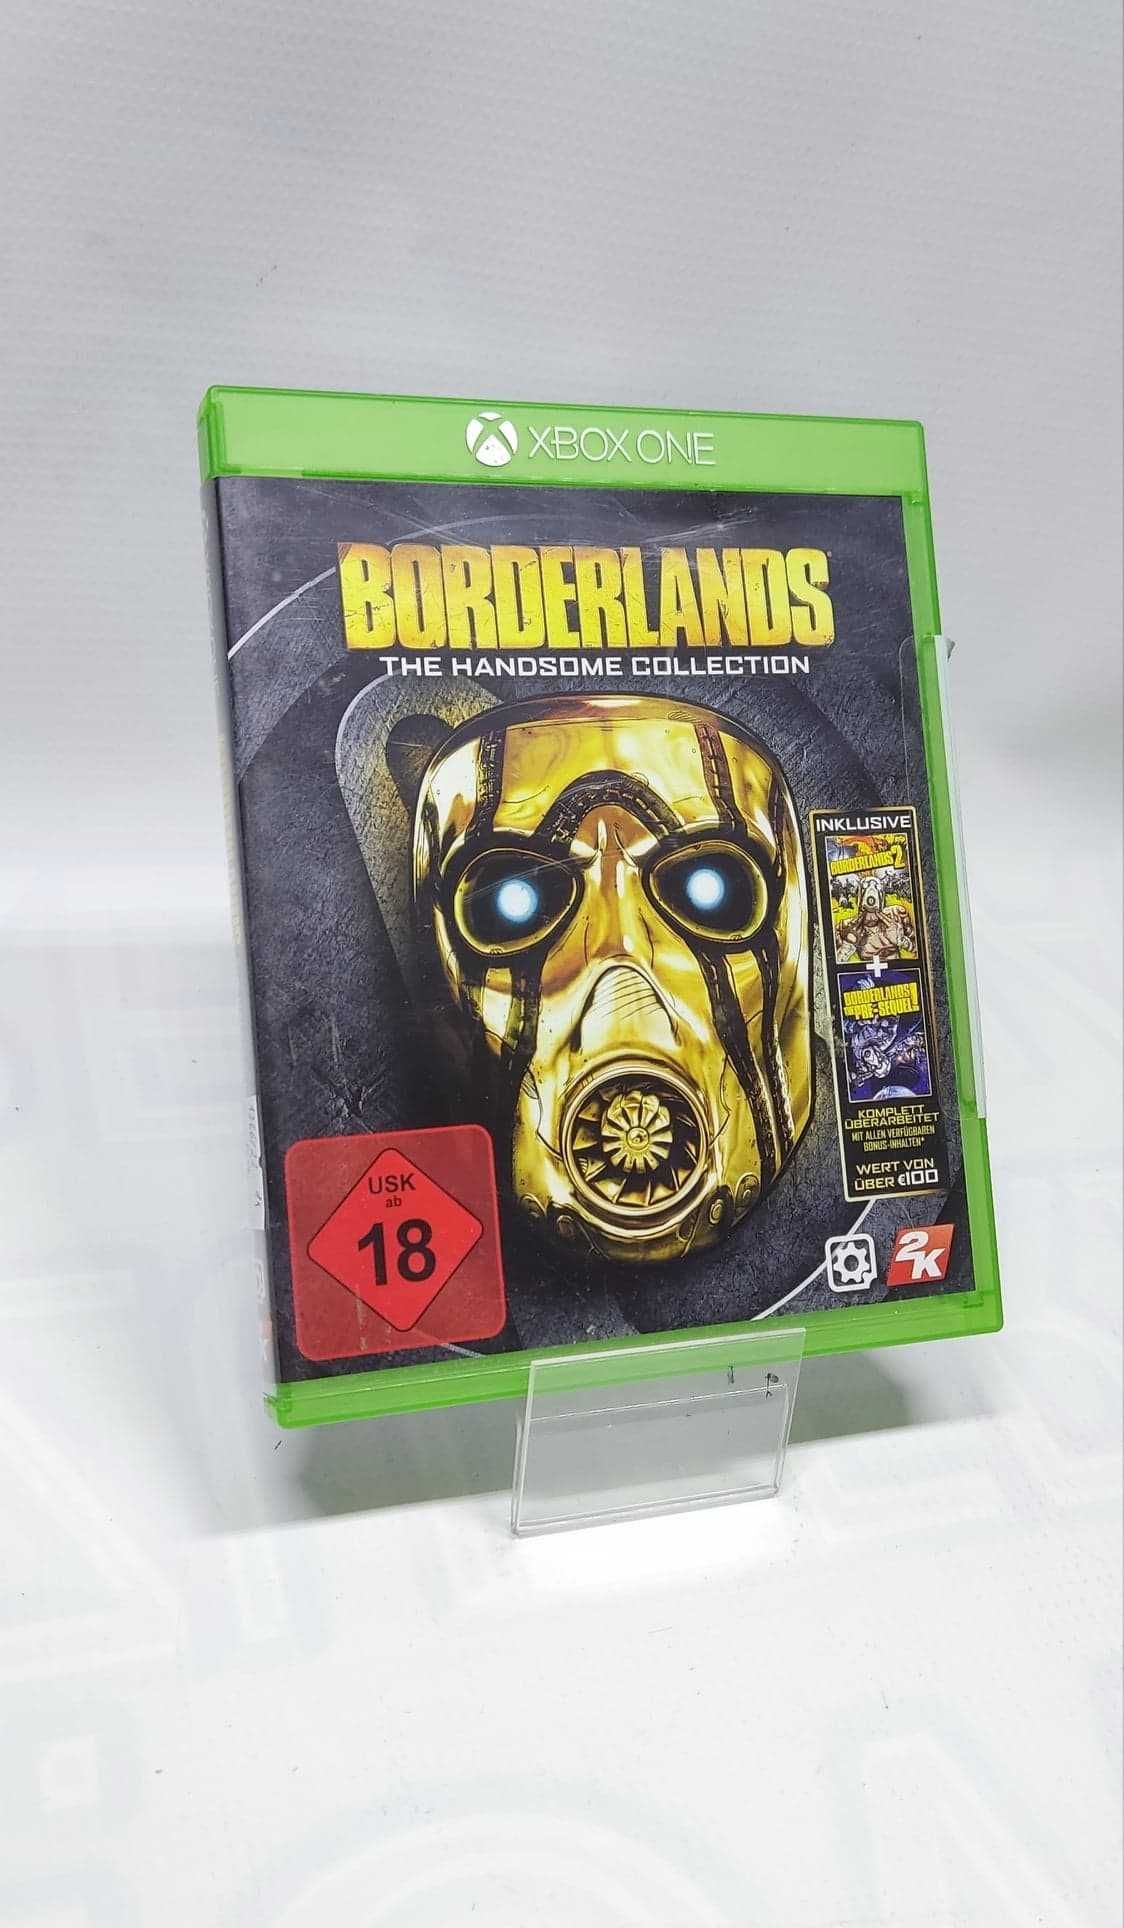 Gra XboxOne Borderlands The Handsone Collection,Lombard Krosno Betleja